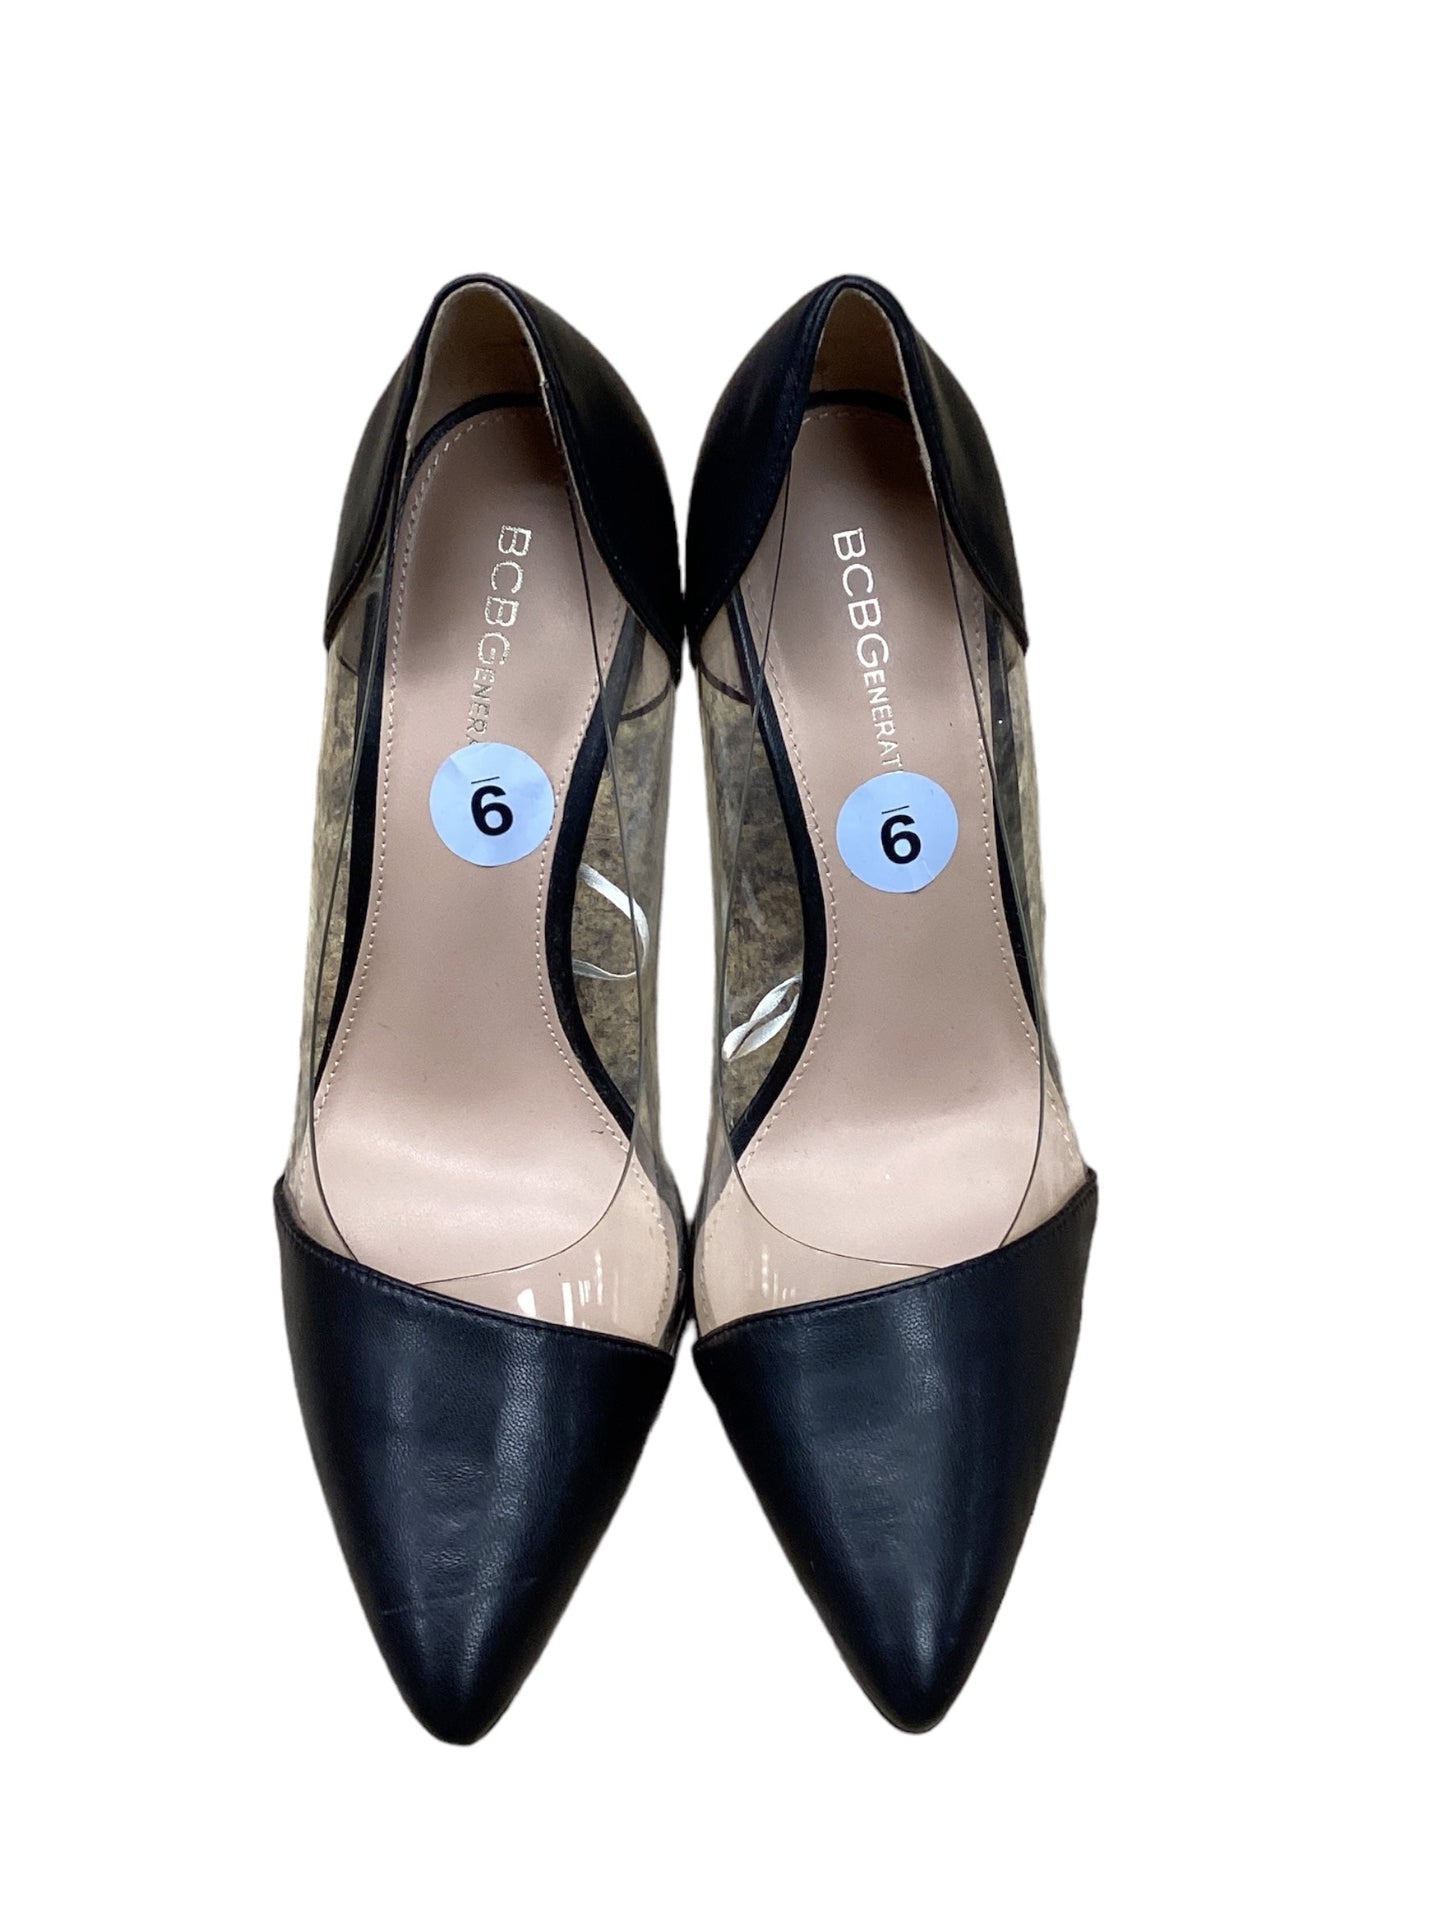 Black Shoes Heels Stiletto Bcbgeneration, Size 9